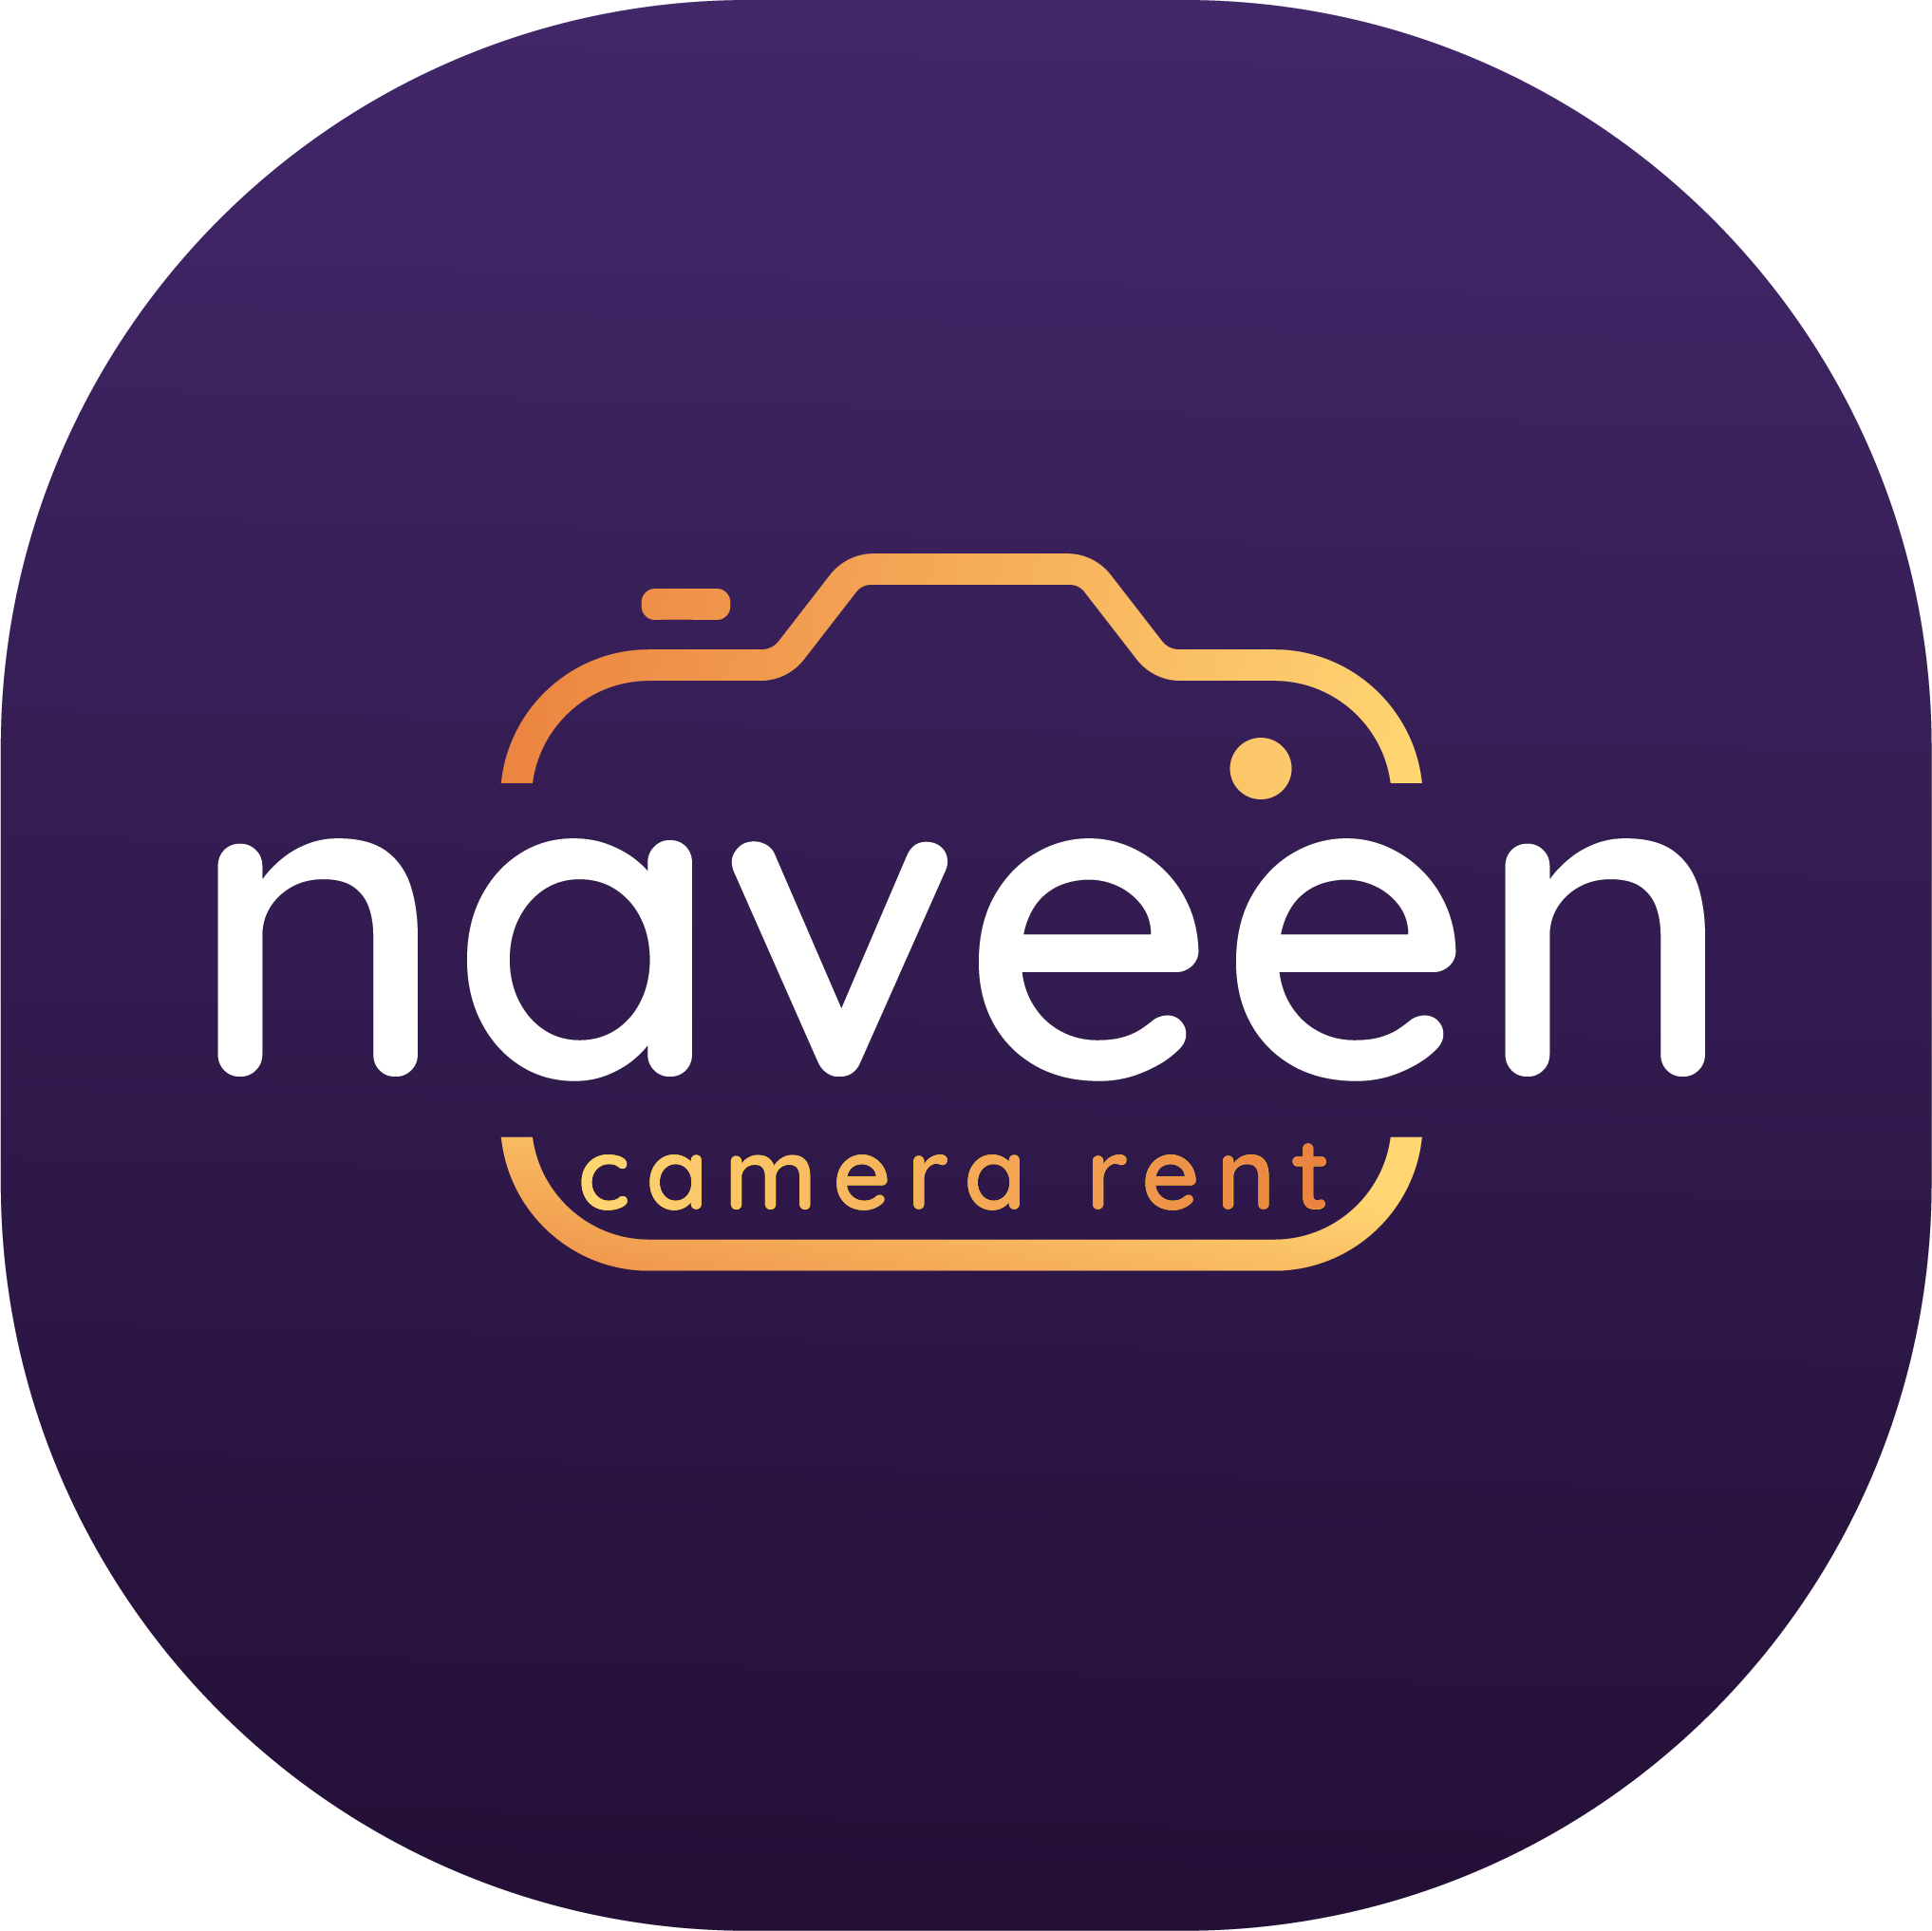 Naveen Camera rent loogo